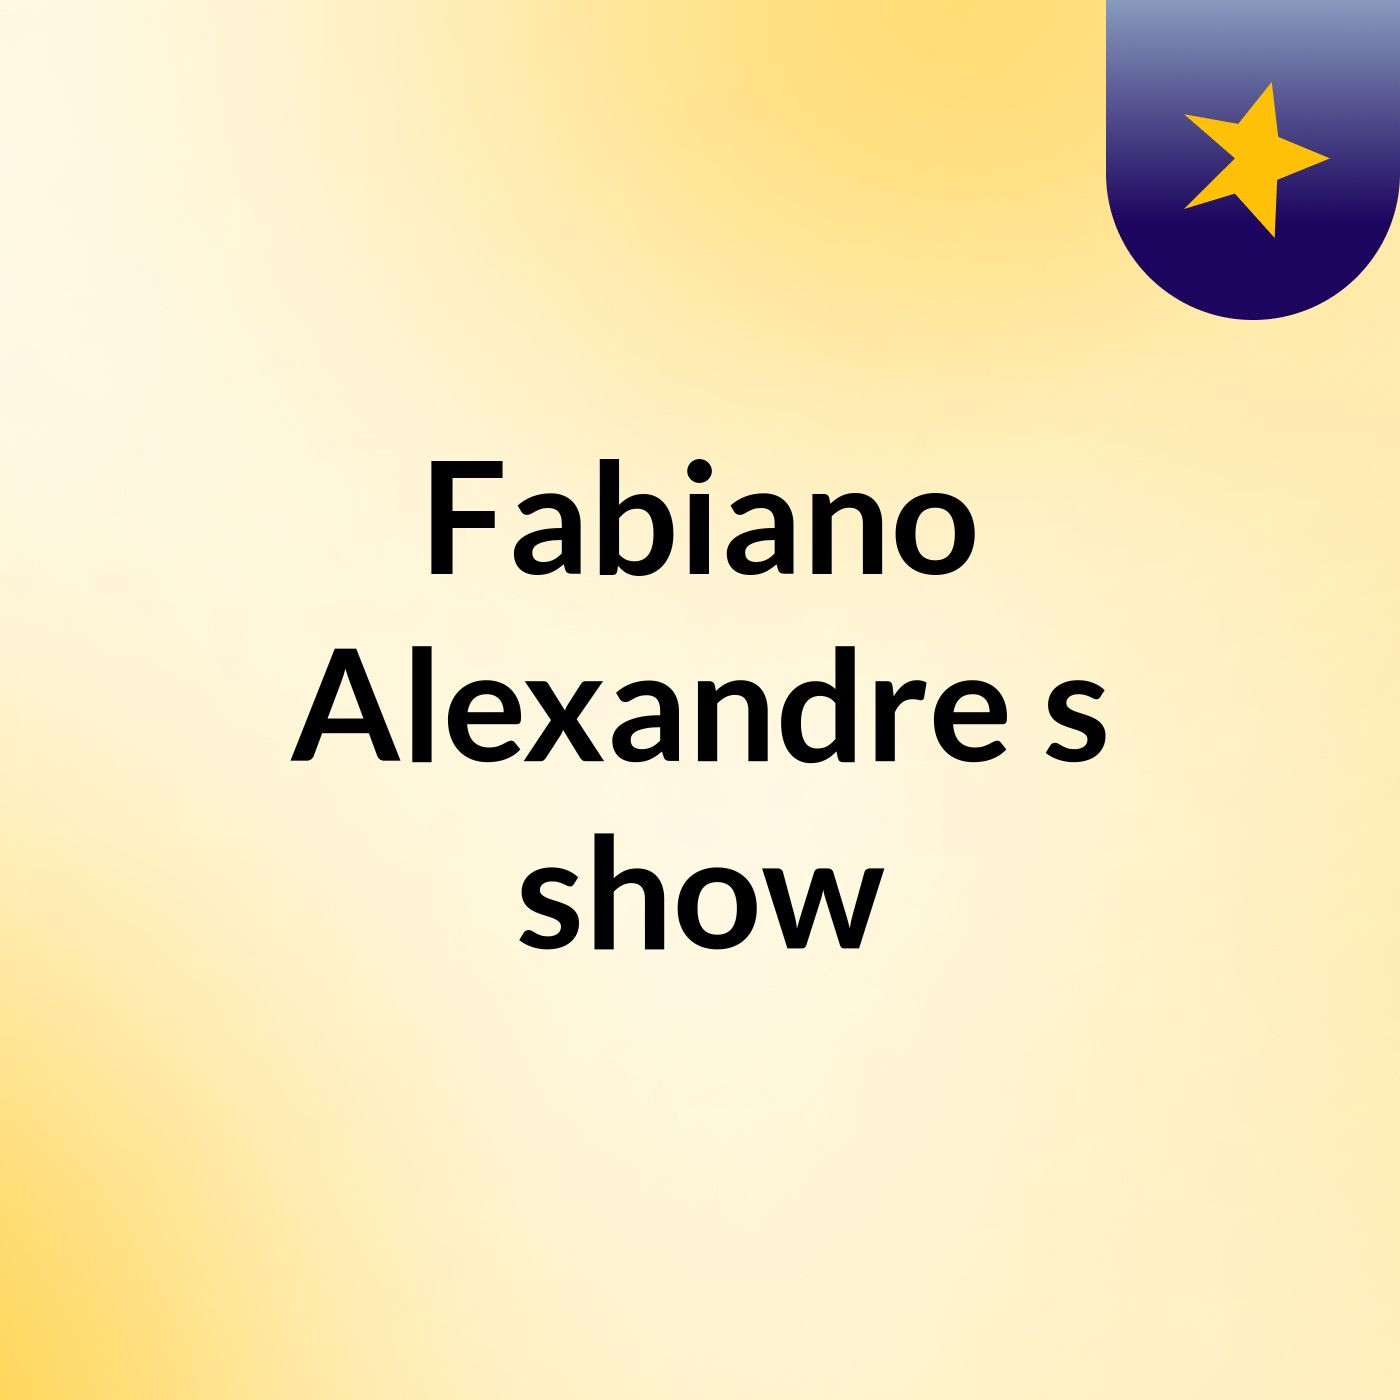 Fabiano Alexandre's show